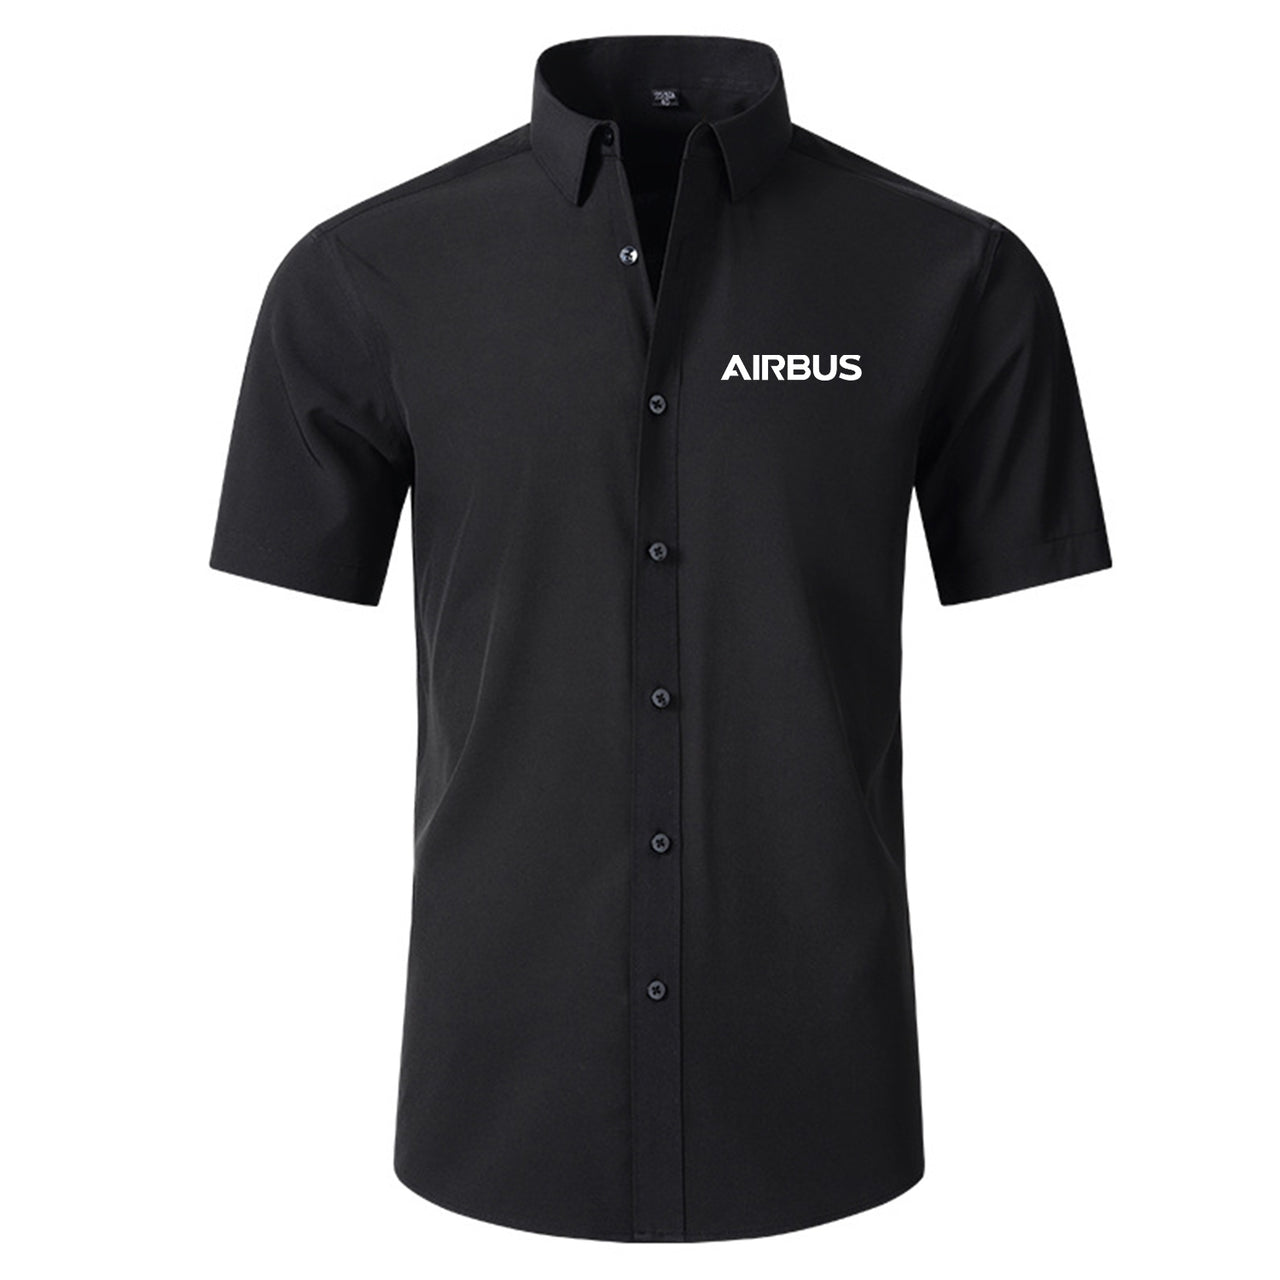 Airbus & Text Designed Short Sleeve Shirts